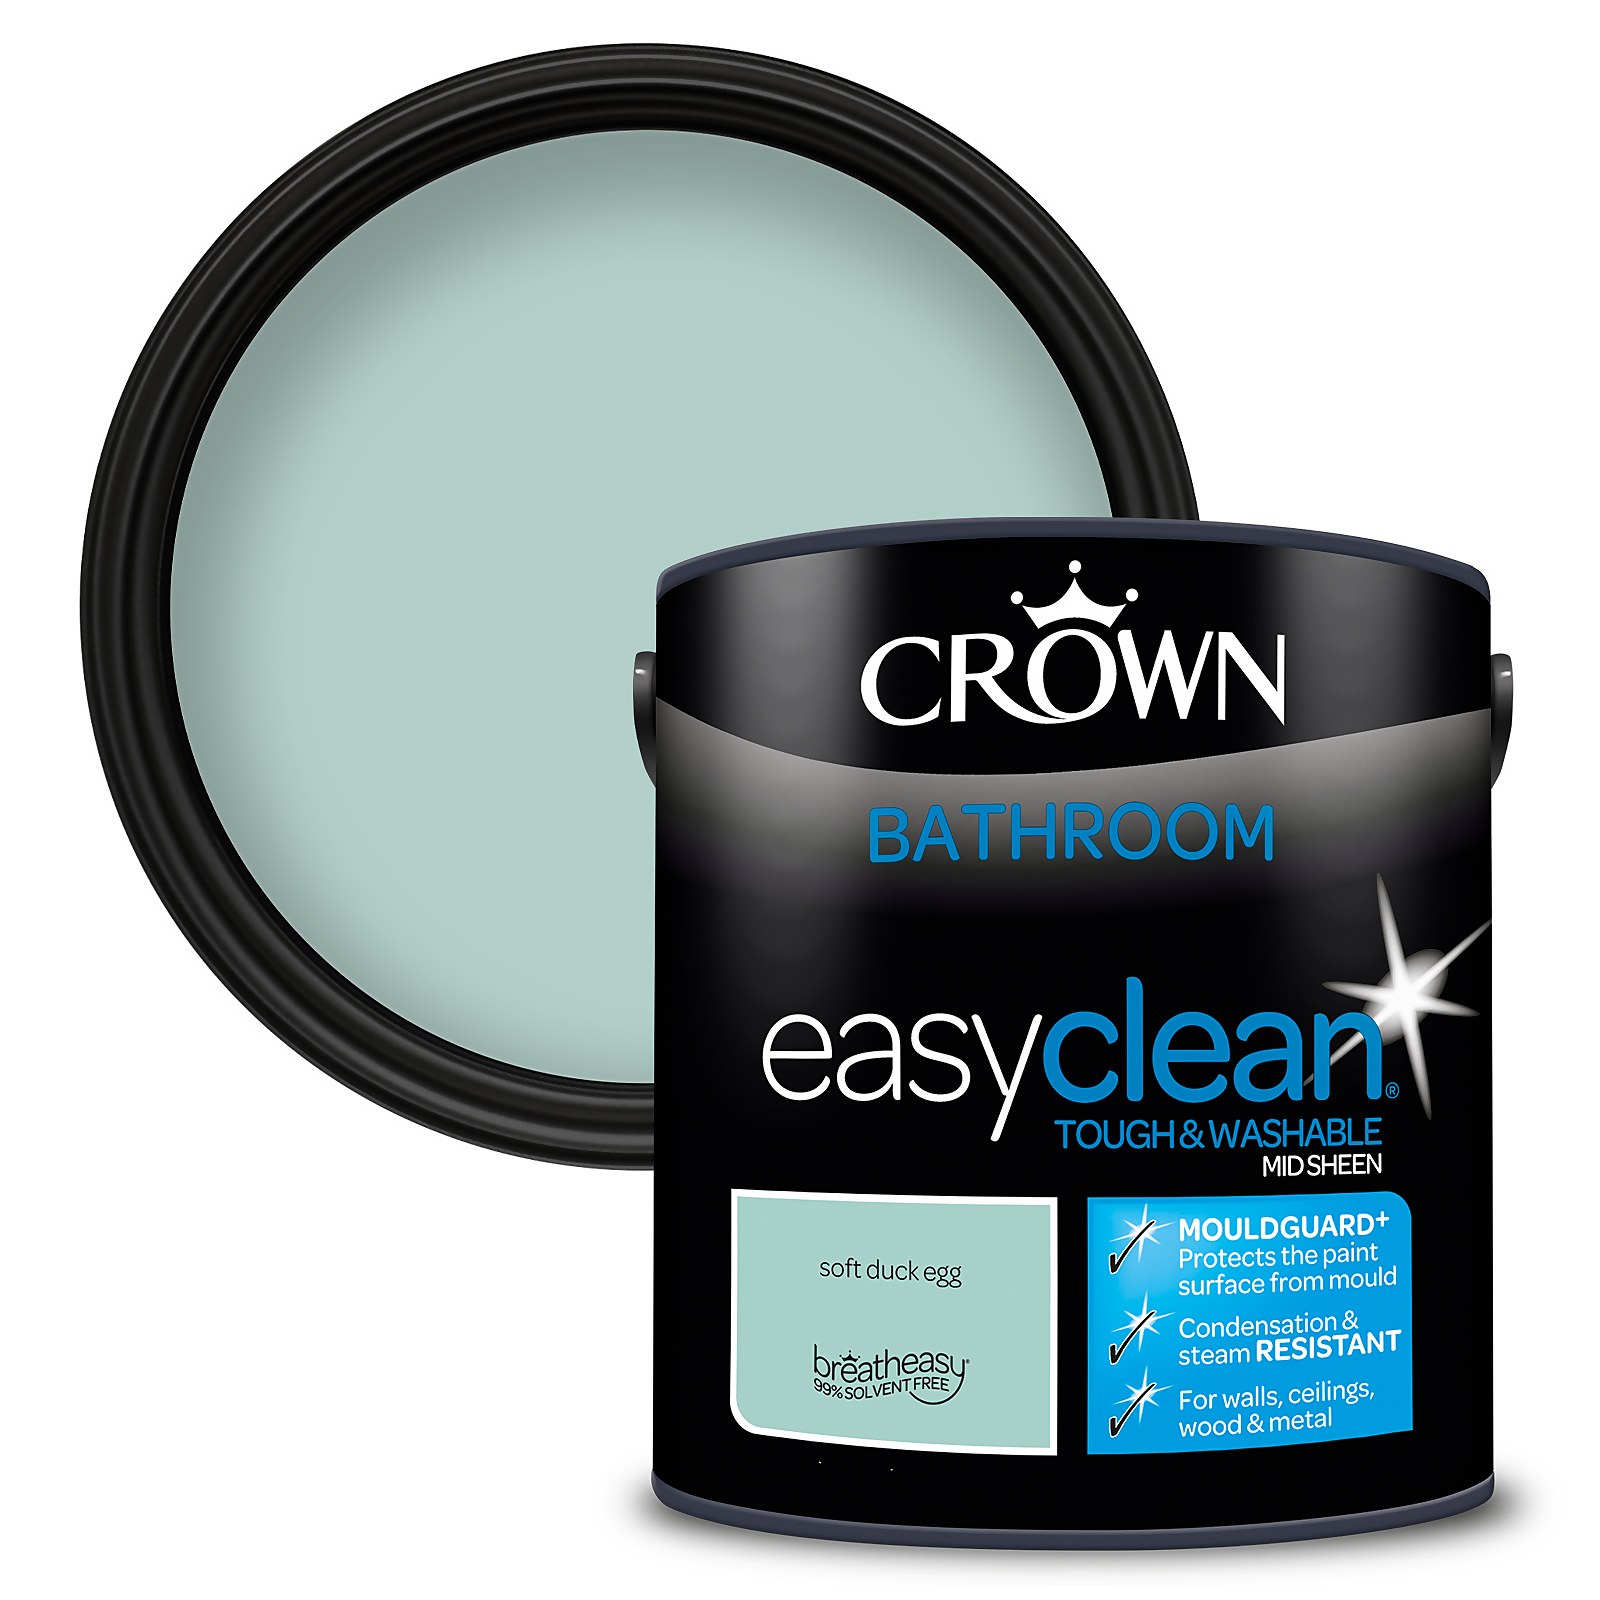 Crown Easyclean Bathroom Mouldguard+ Mid Sheen Paint Soft Duck Egg - 2.5L